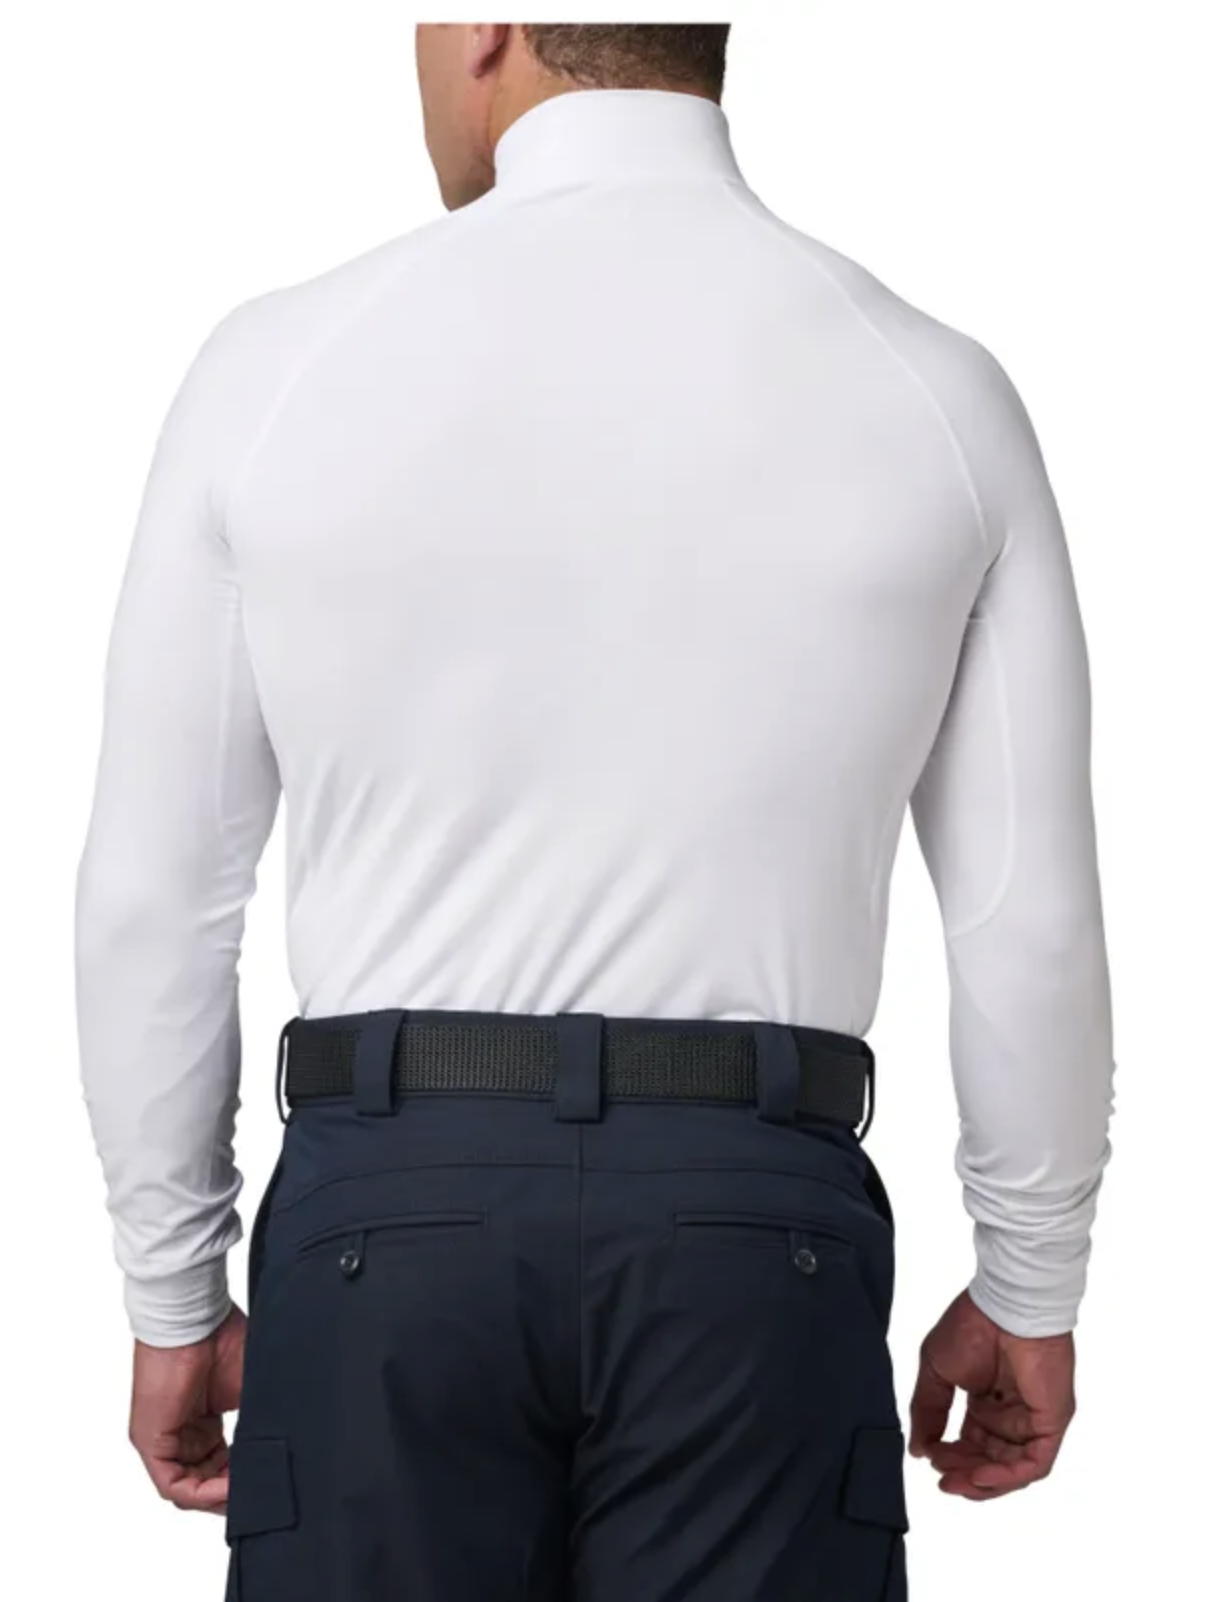 5.11 - Mock Neck Long Sleeve top - Uniform White (992)